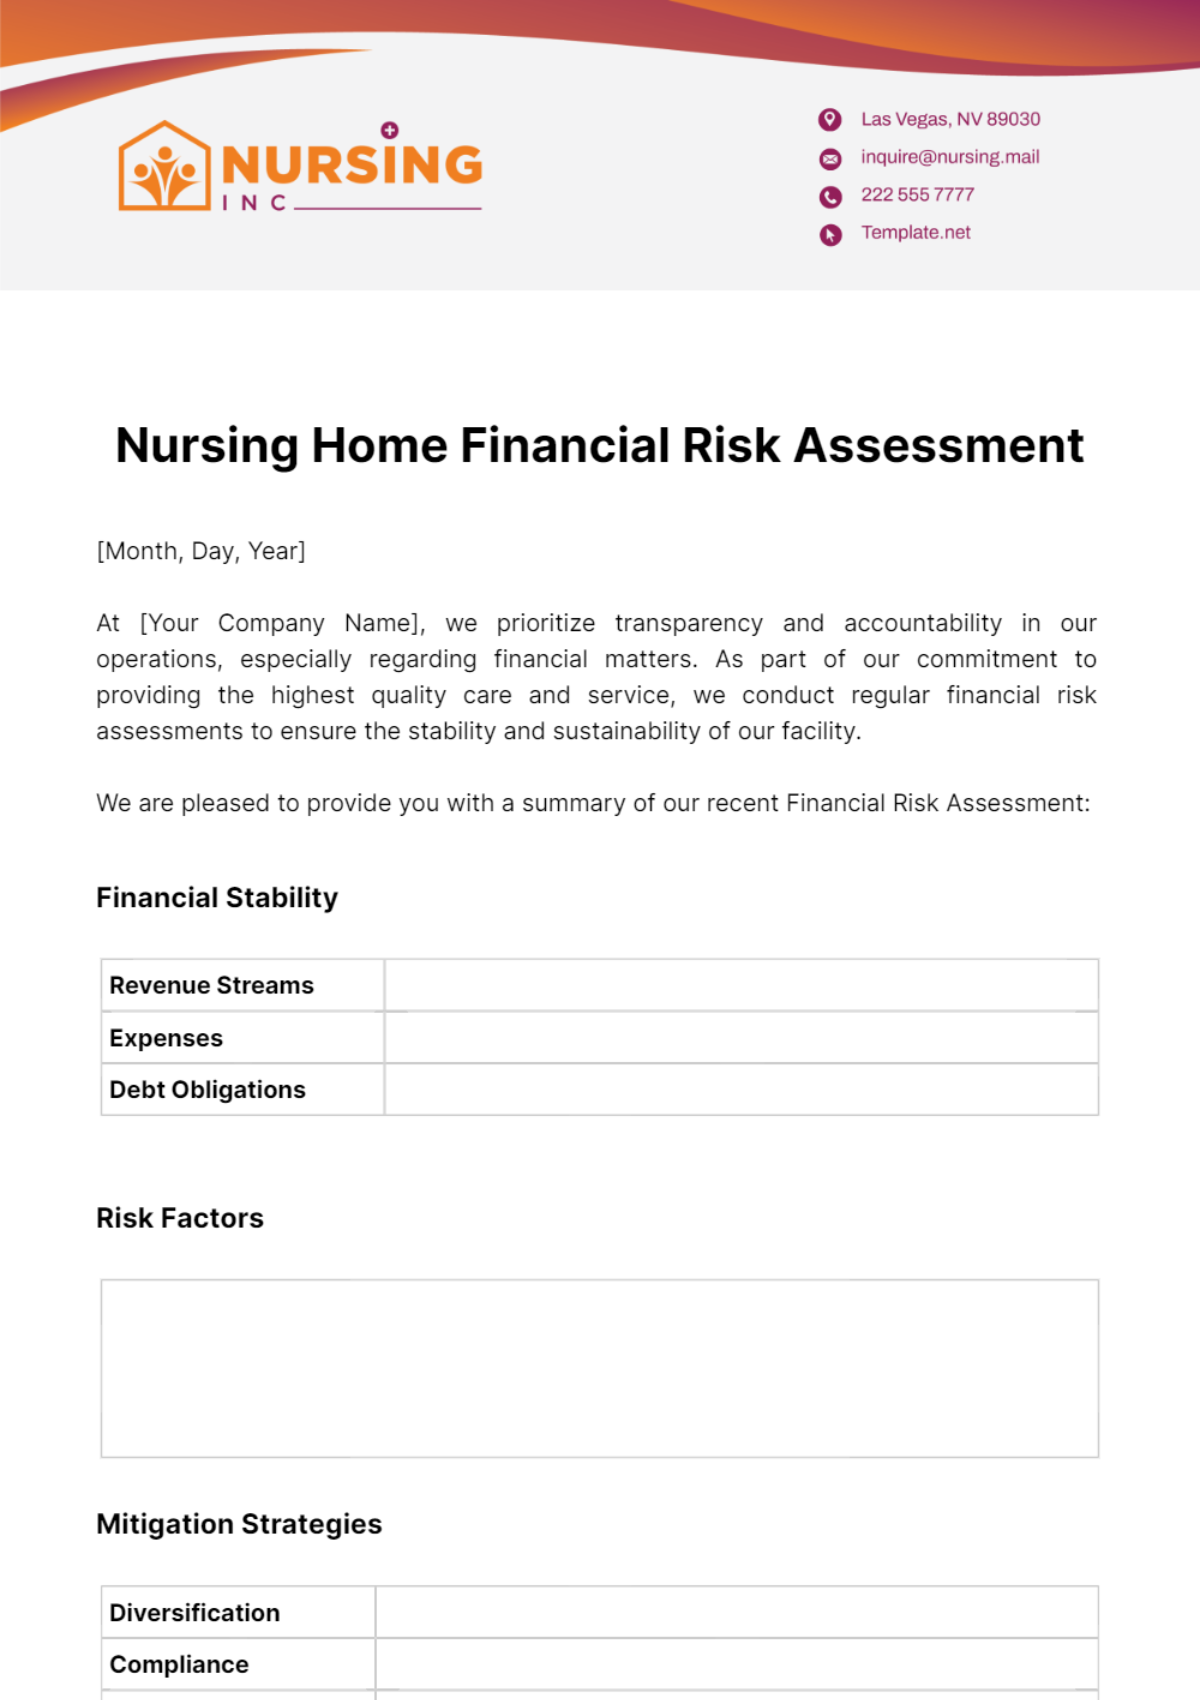 Nursing Home Financial Risk Assessment Template